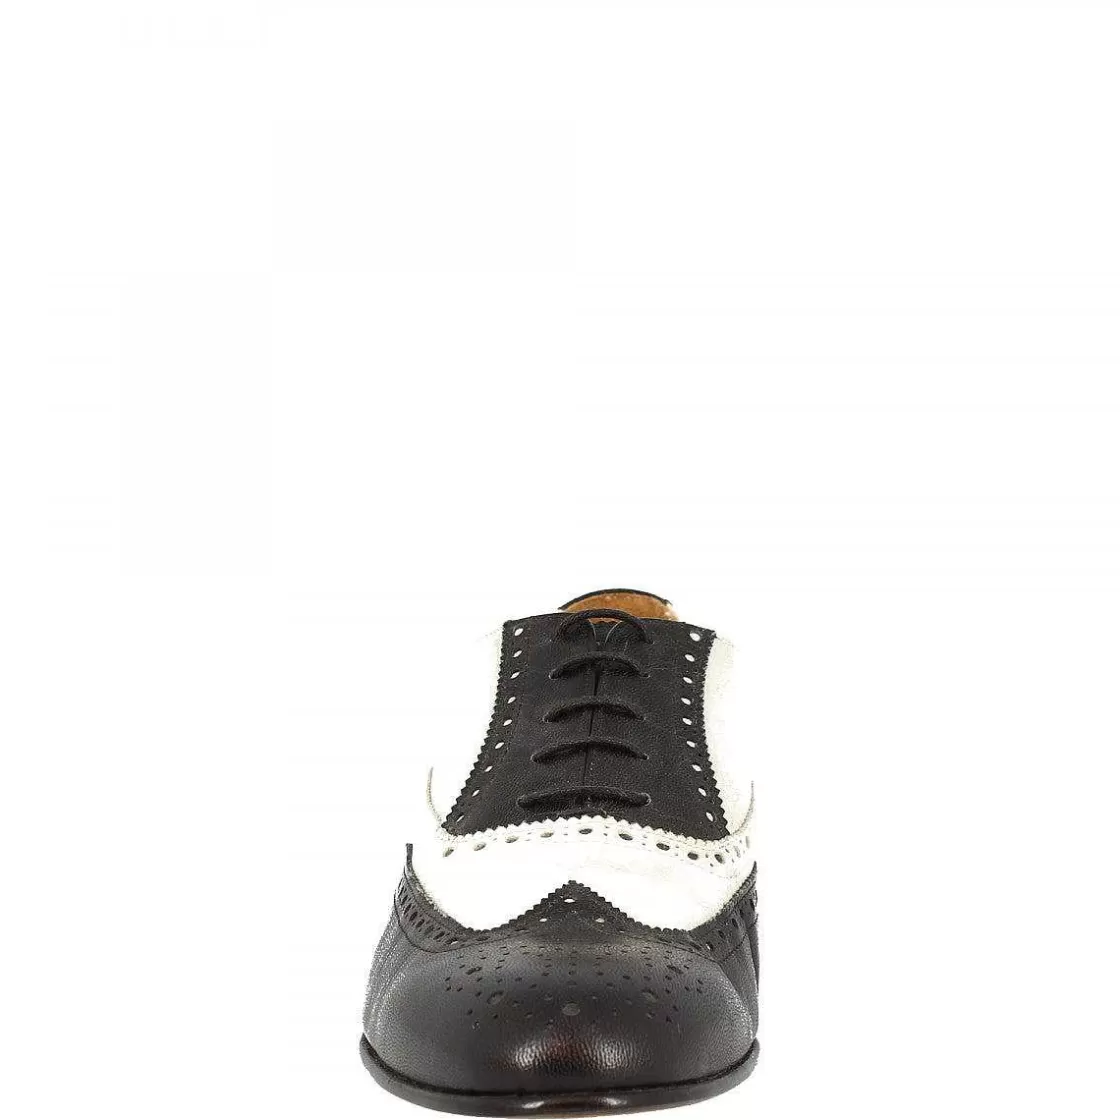 Leonardo Low Handmade Black And White Oxford Shoes Online